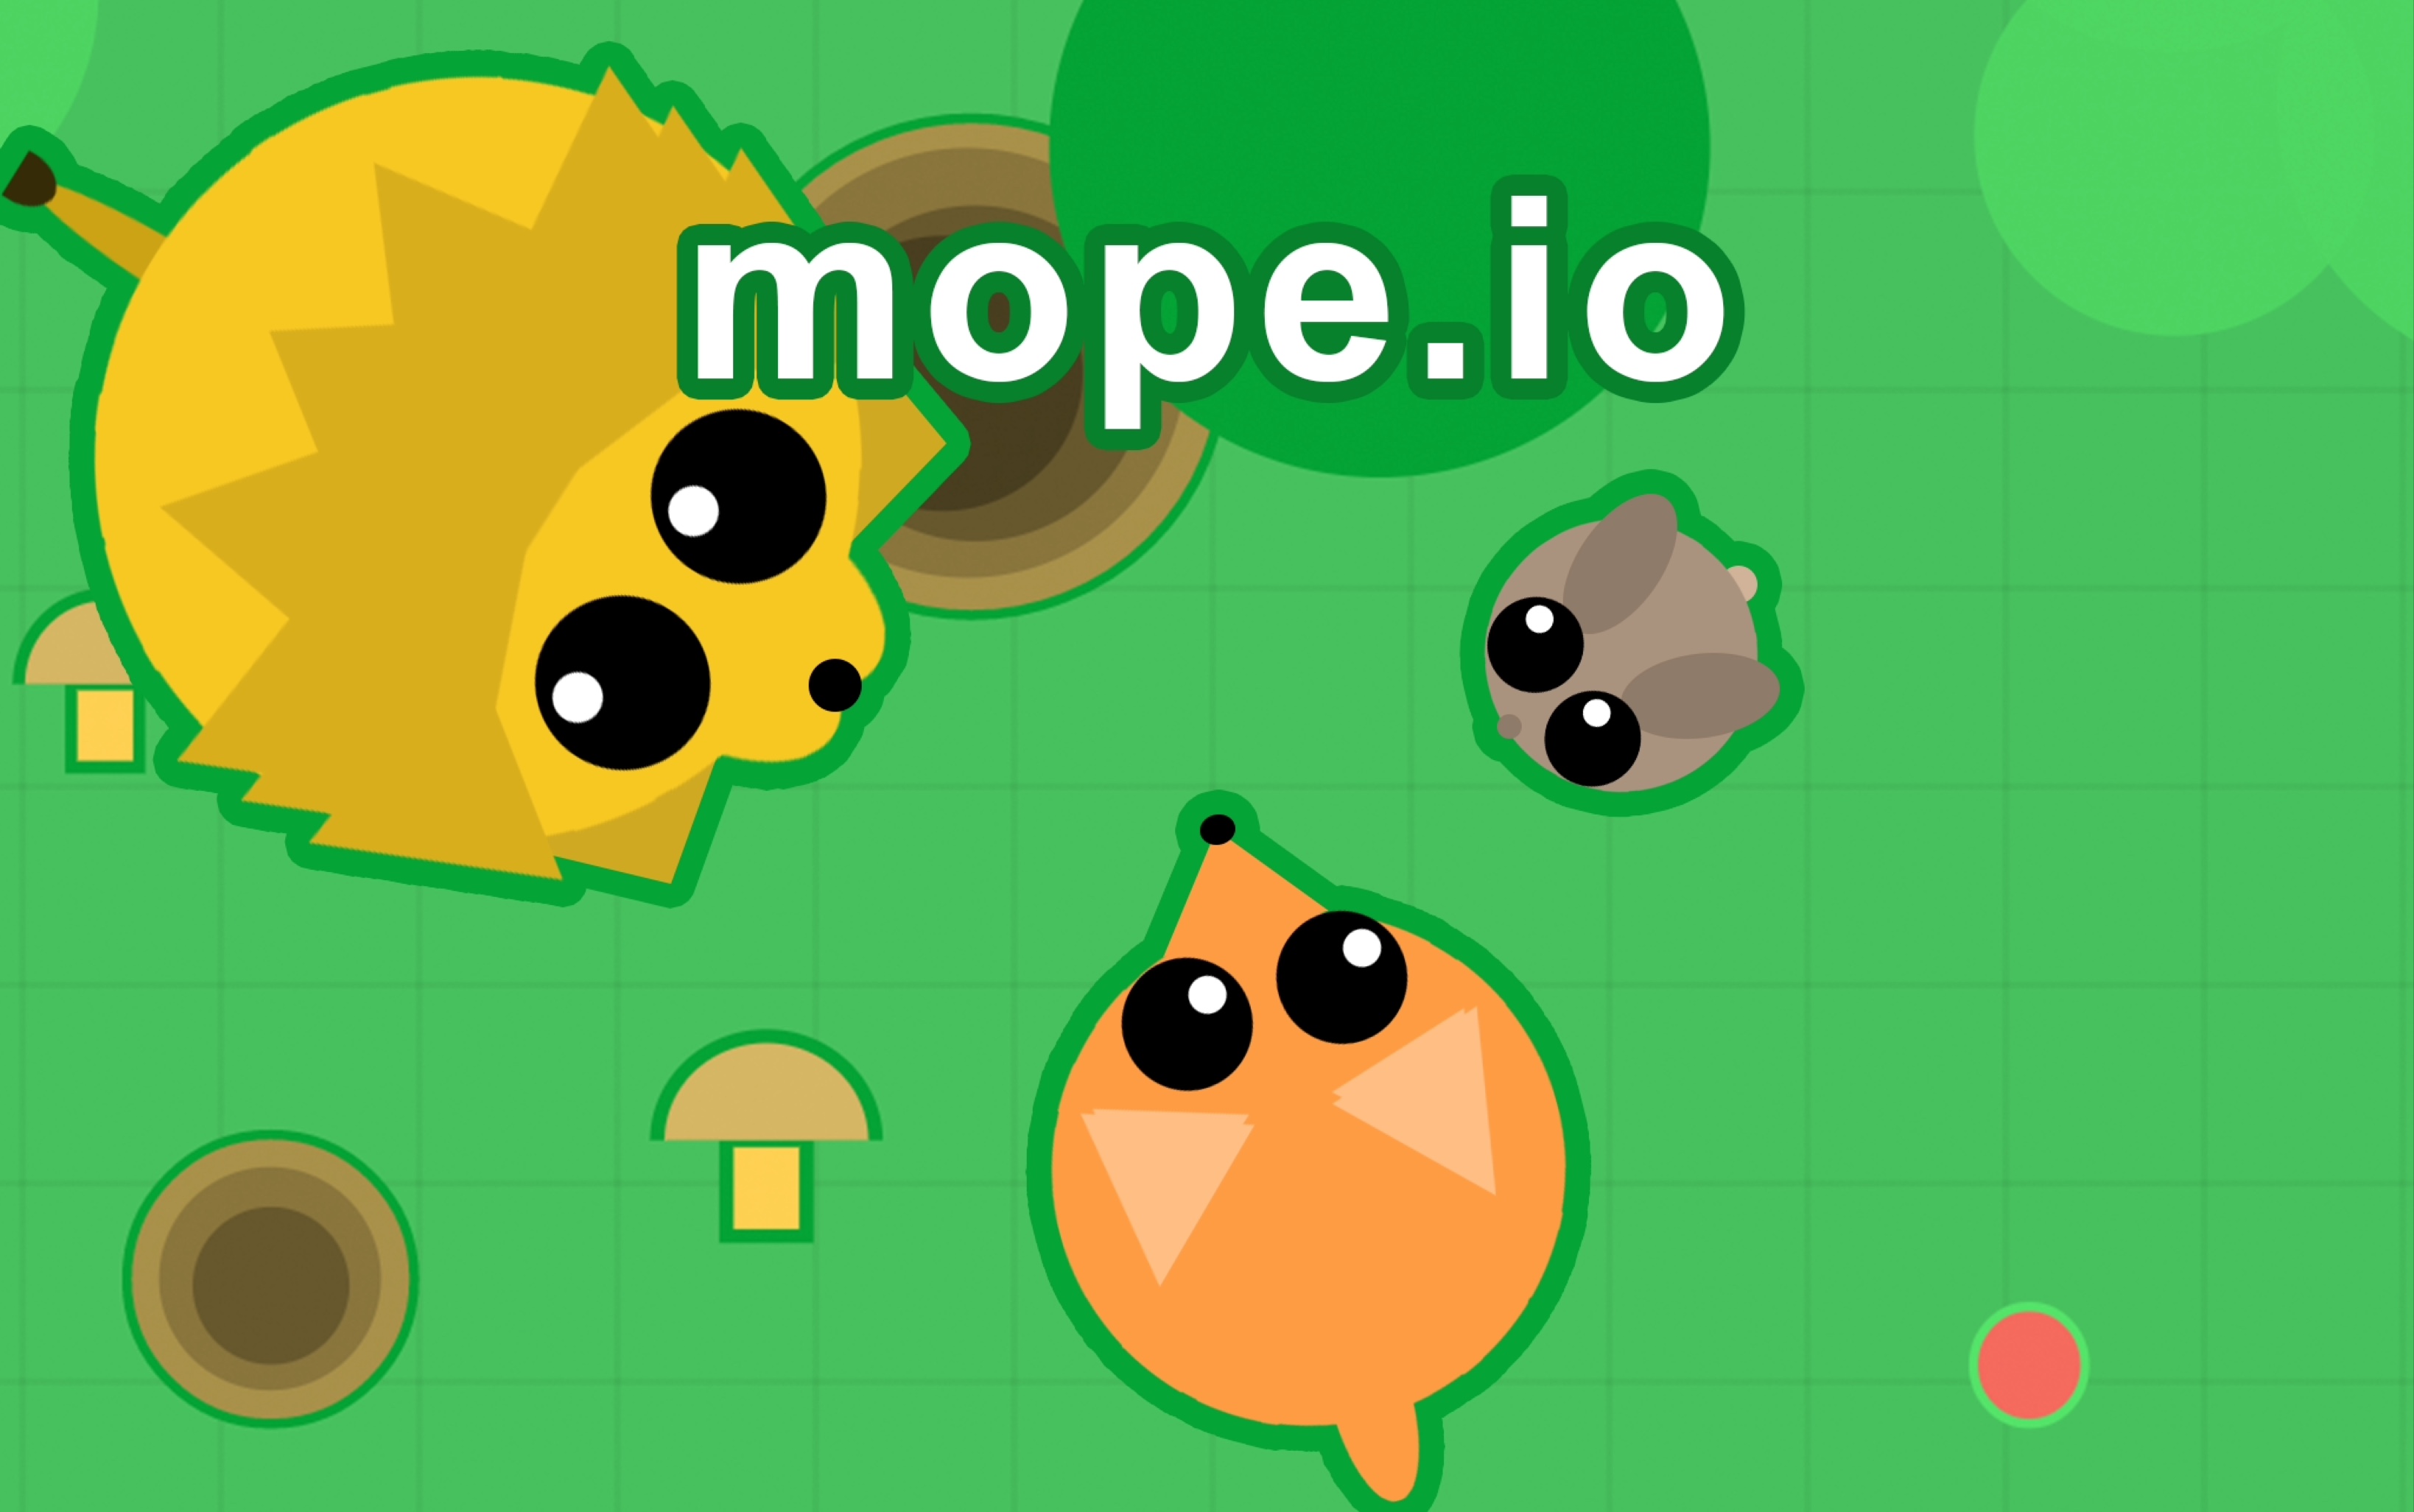 mopemope原版图片